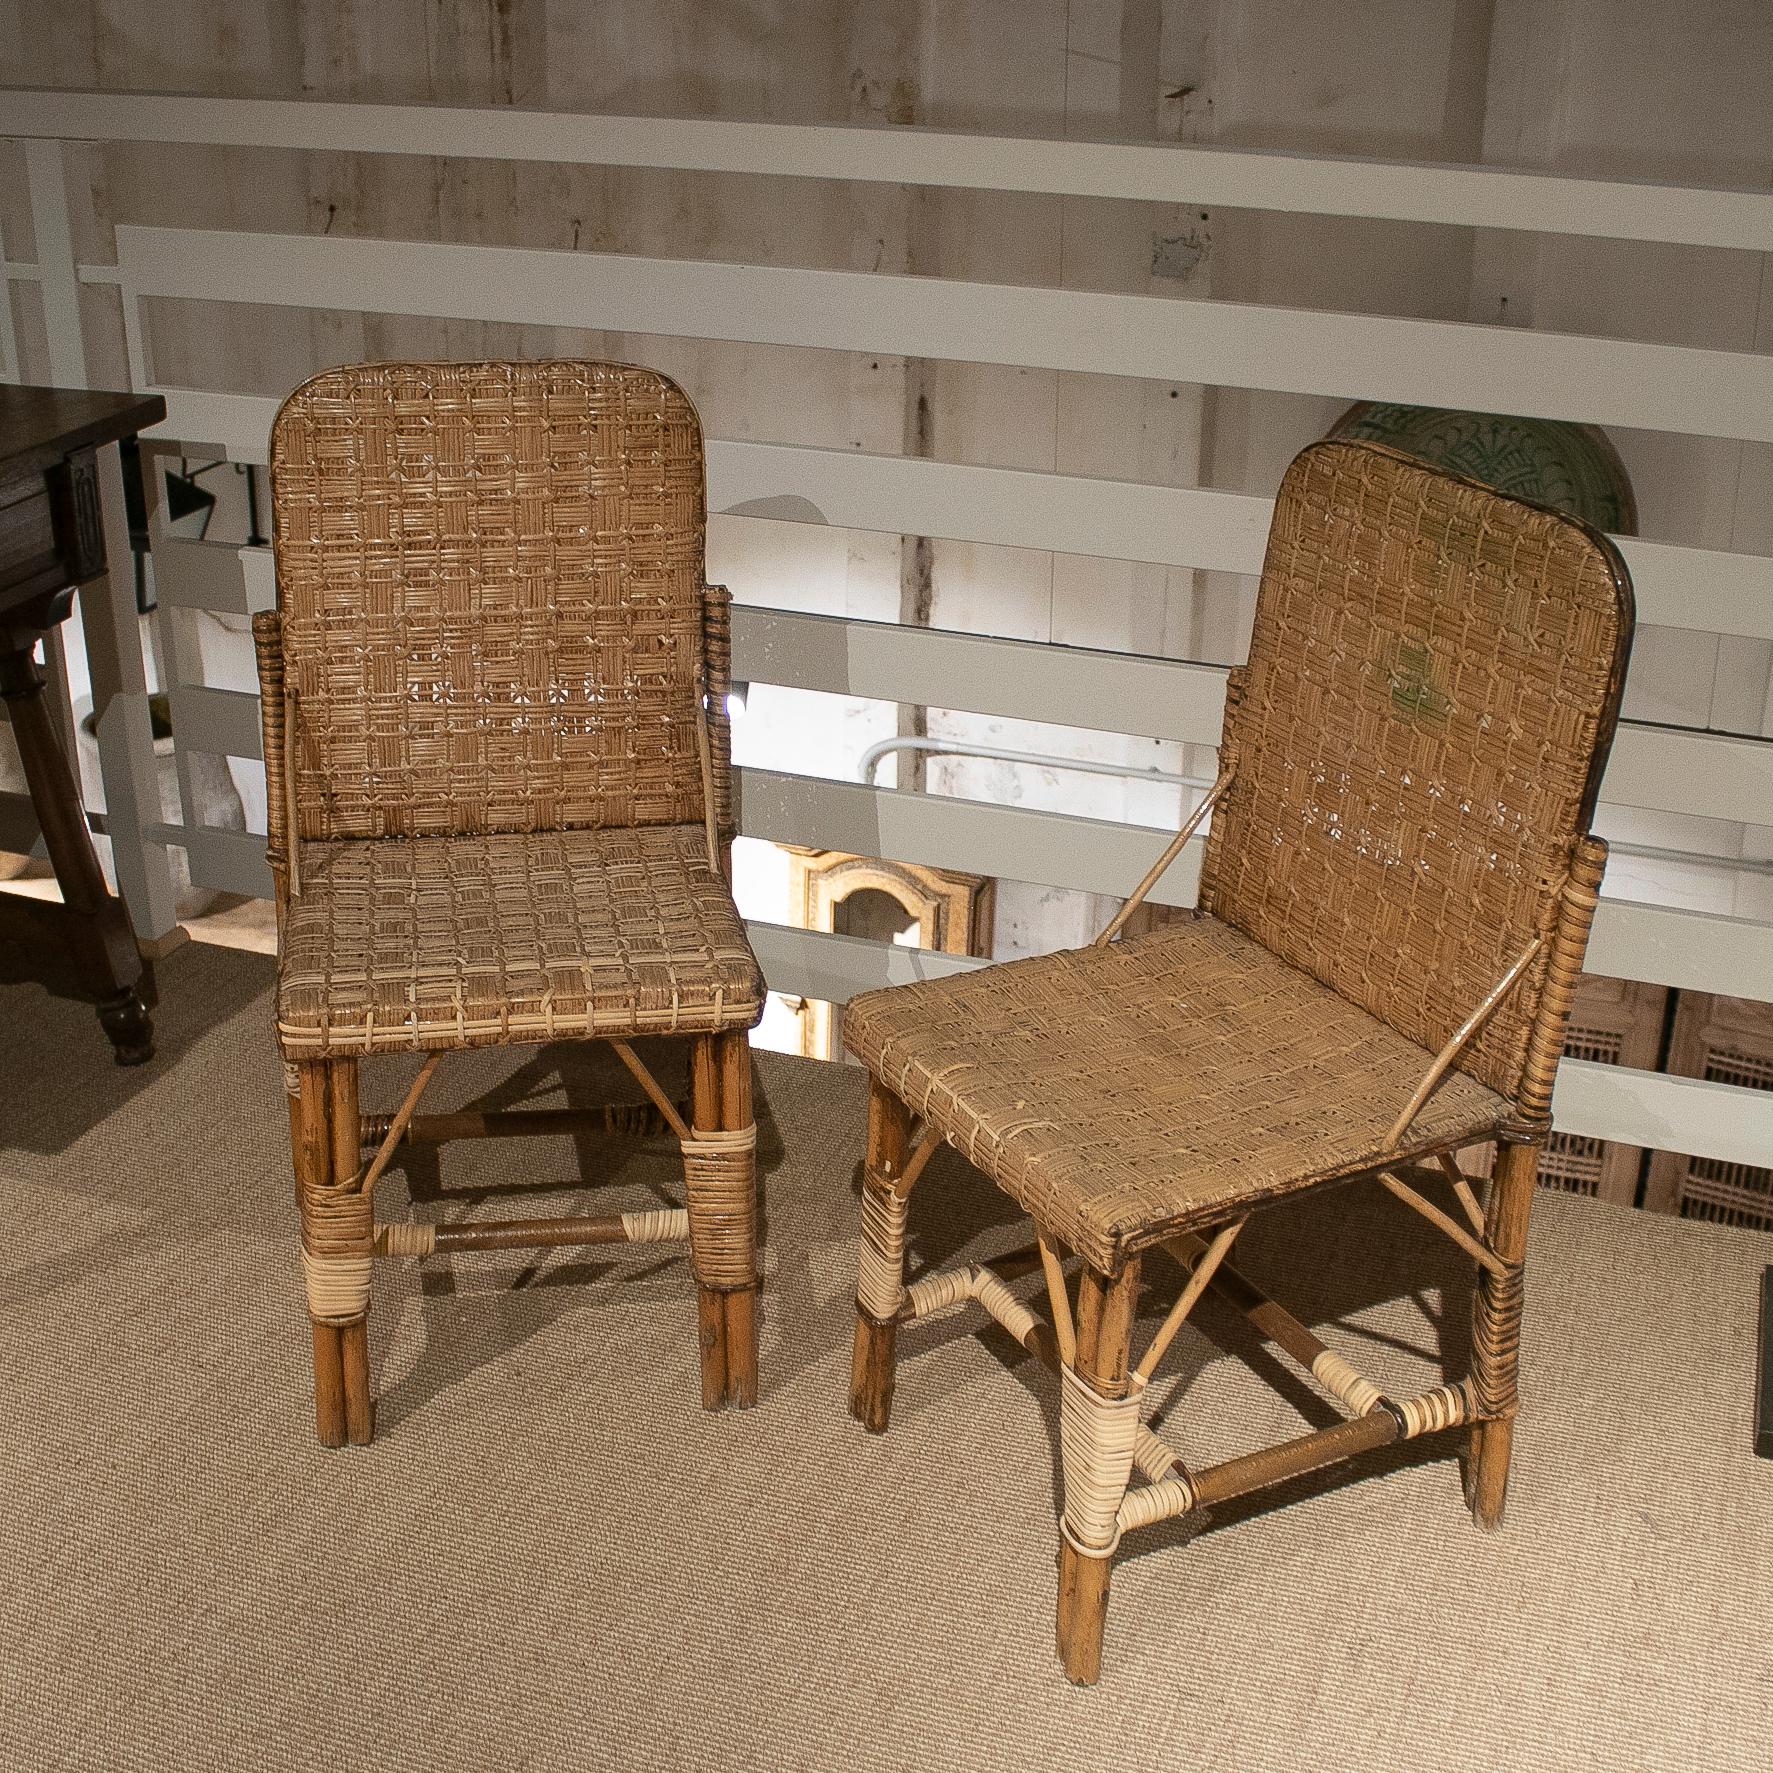 woven wicker chairs -china -b2b -forum -blog -wikipedia -.cn -.gov -alibaba